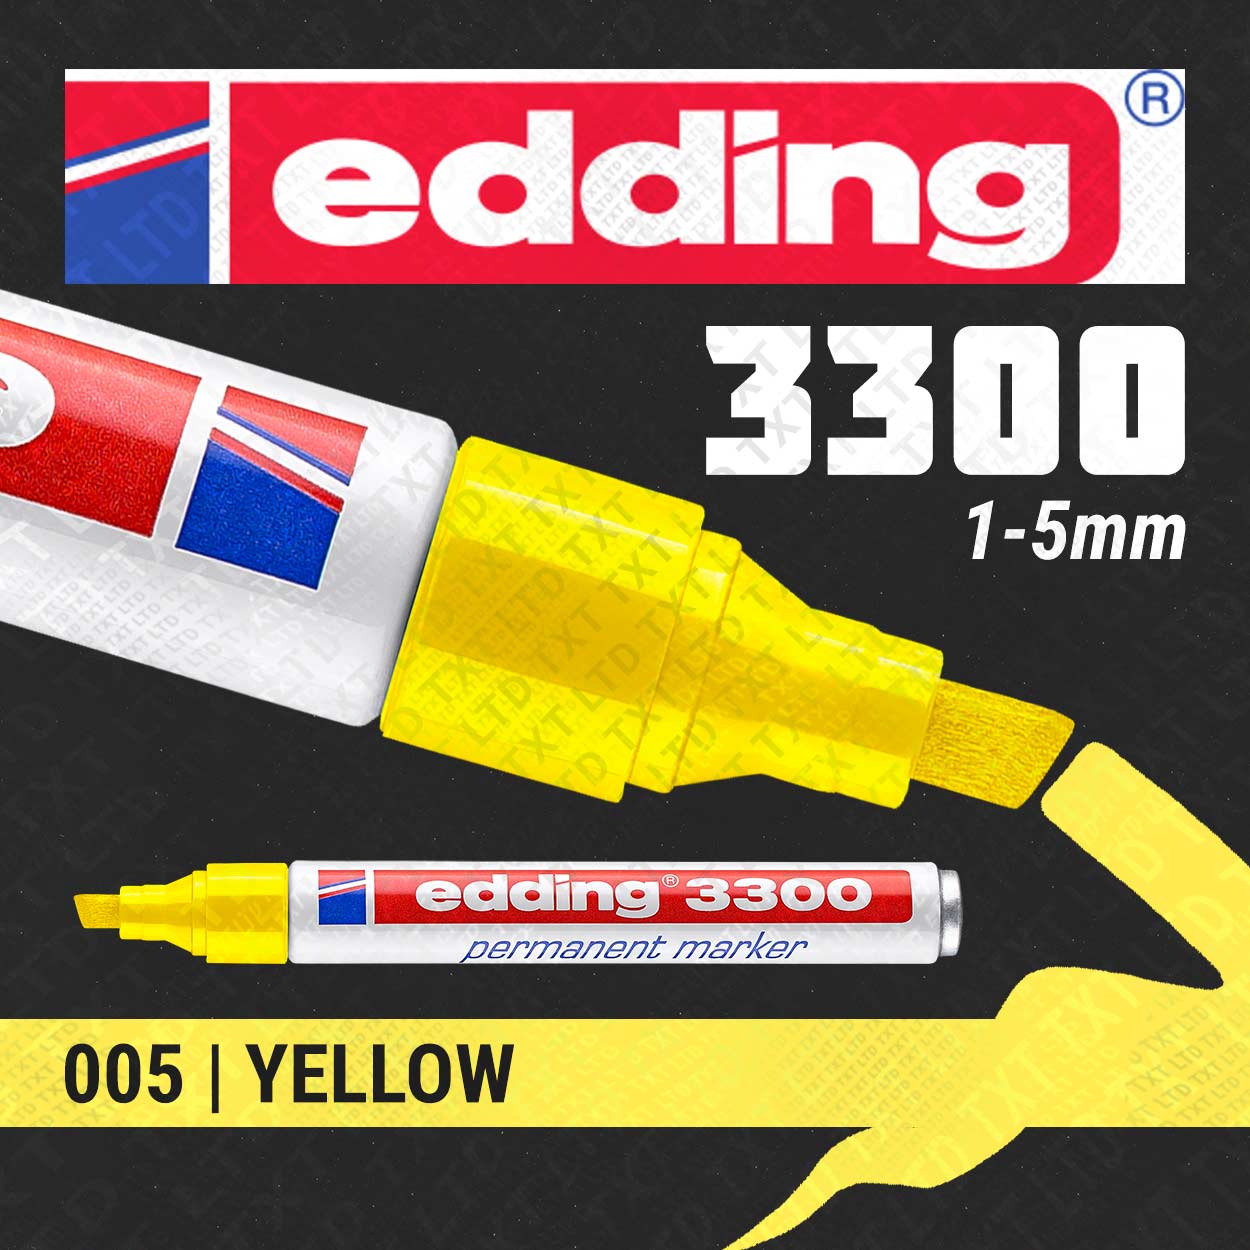 edding 3300 Permanent Marker